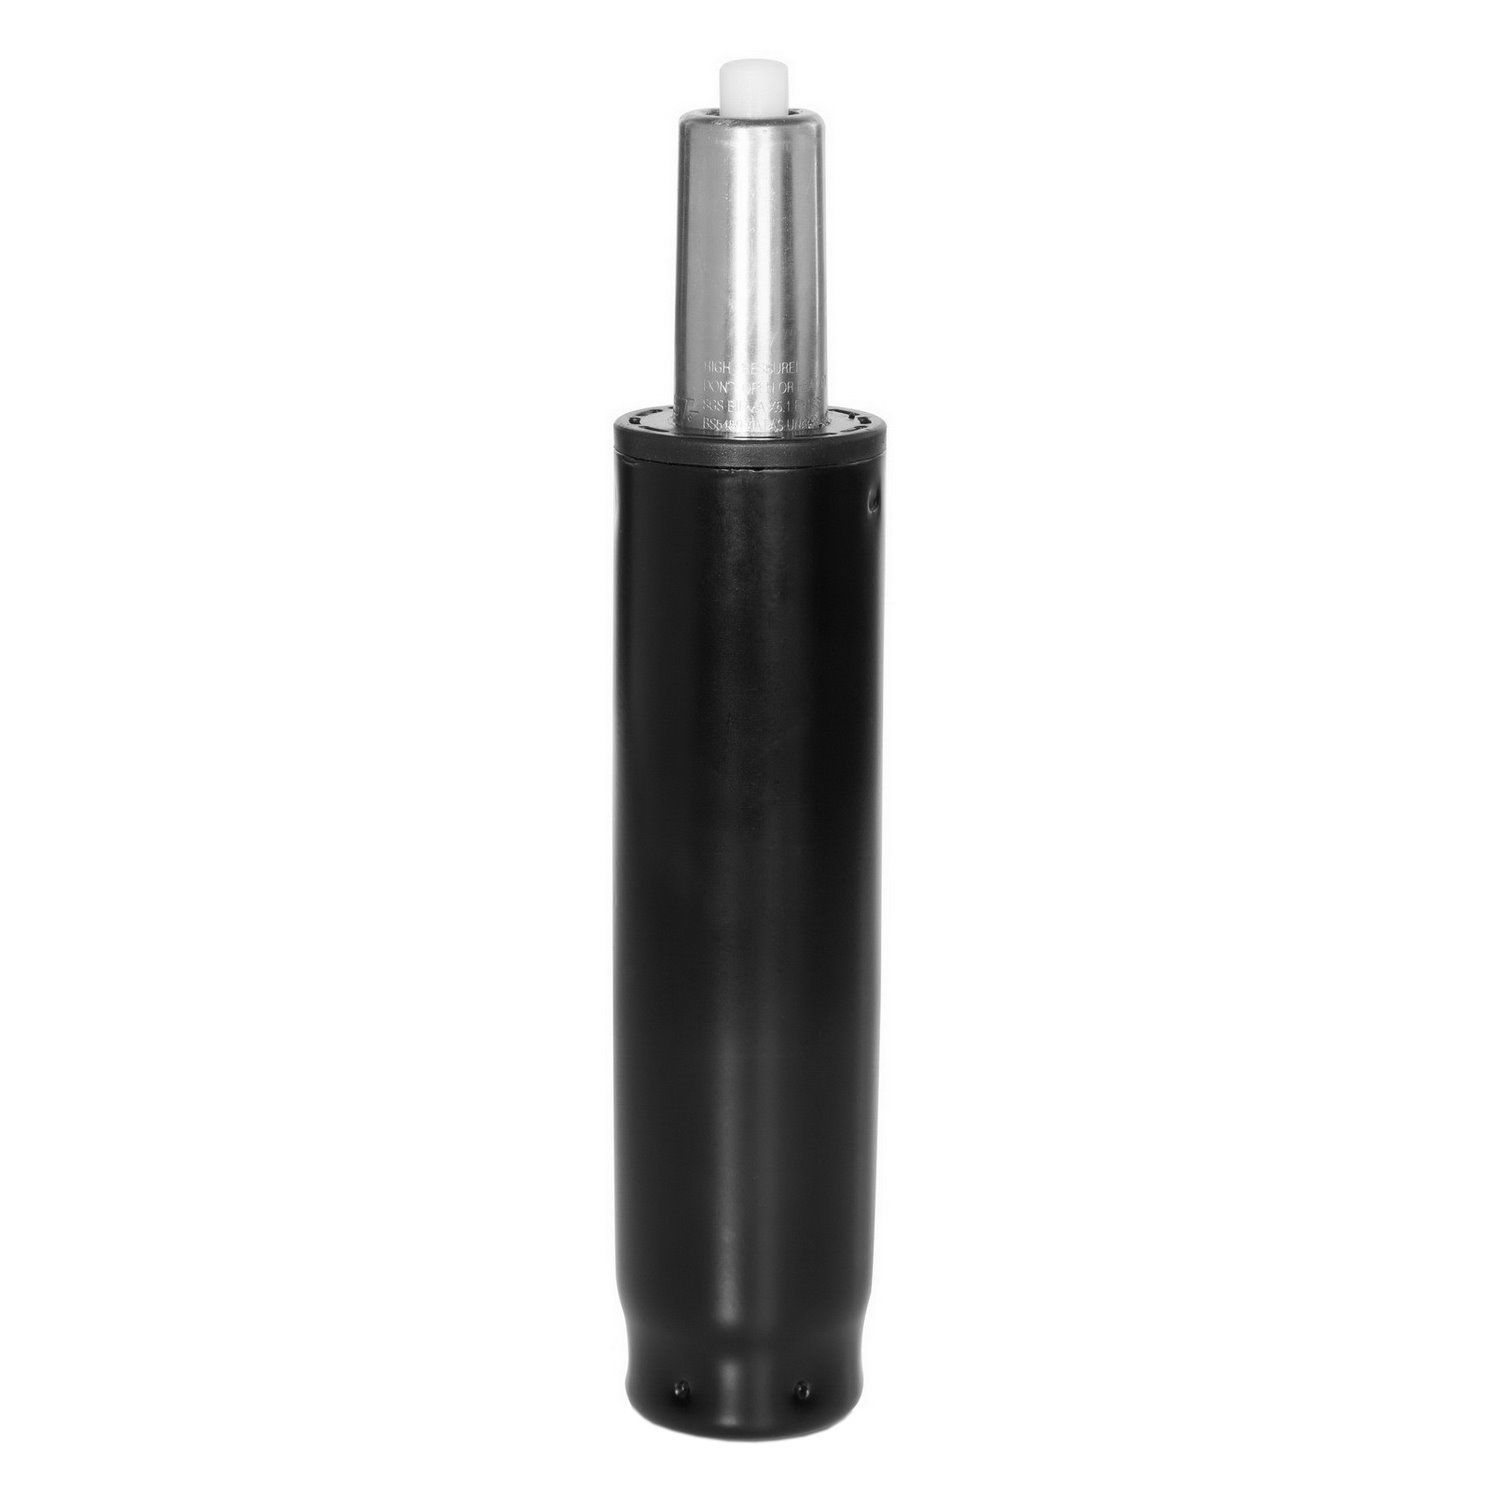 Gasfeder / Gasdruckfeder S - schwarz, 25-32 cm hjh OFFICE